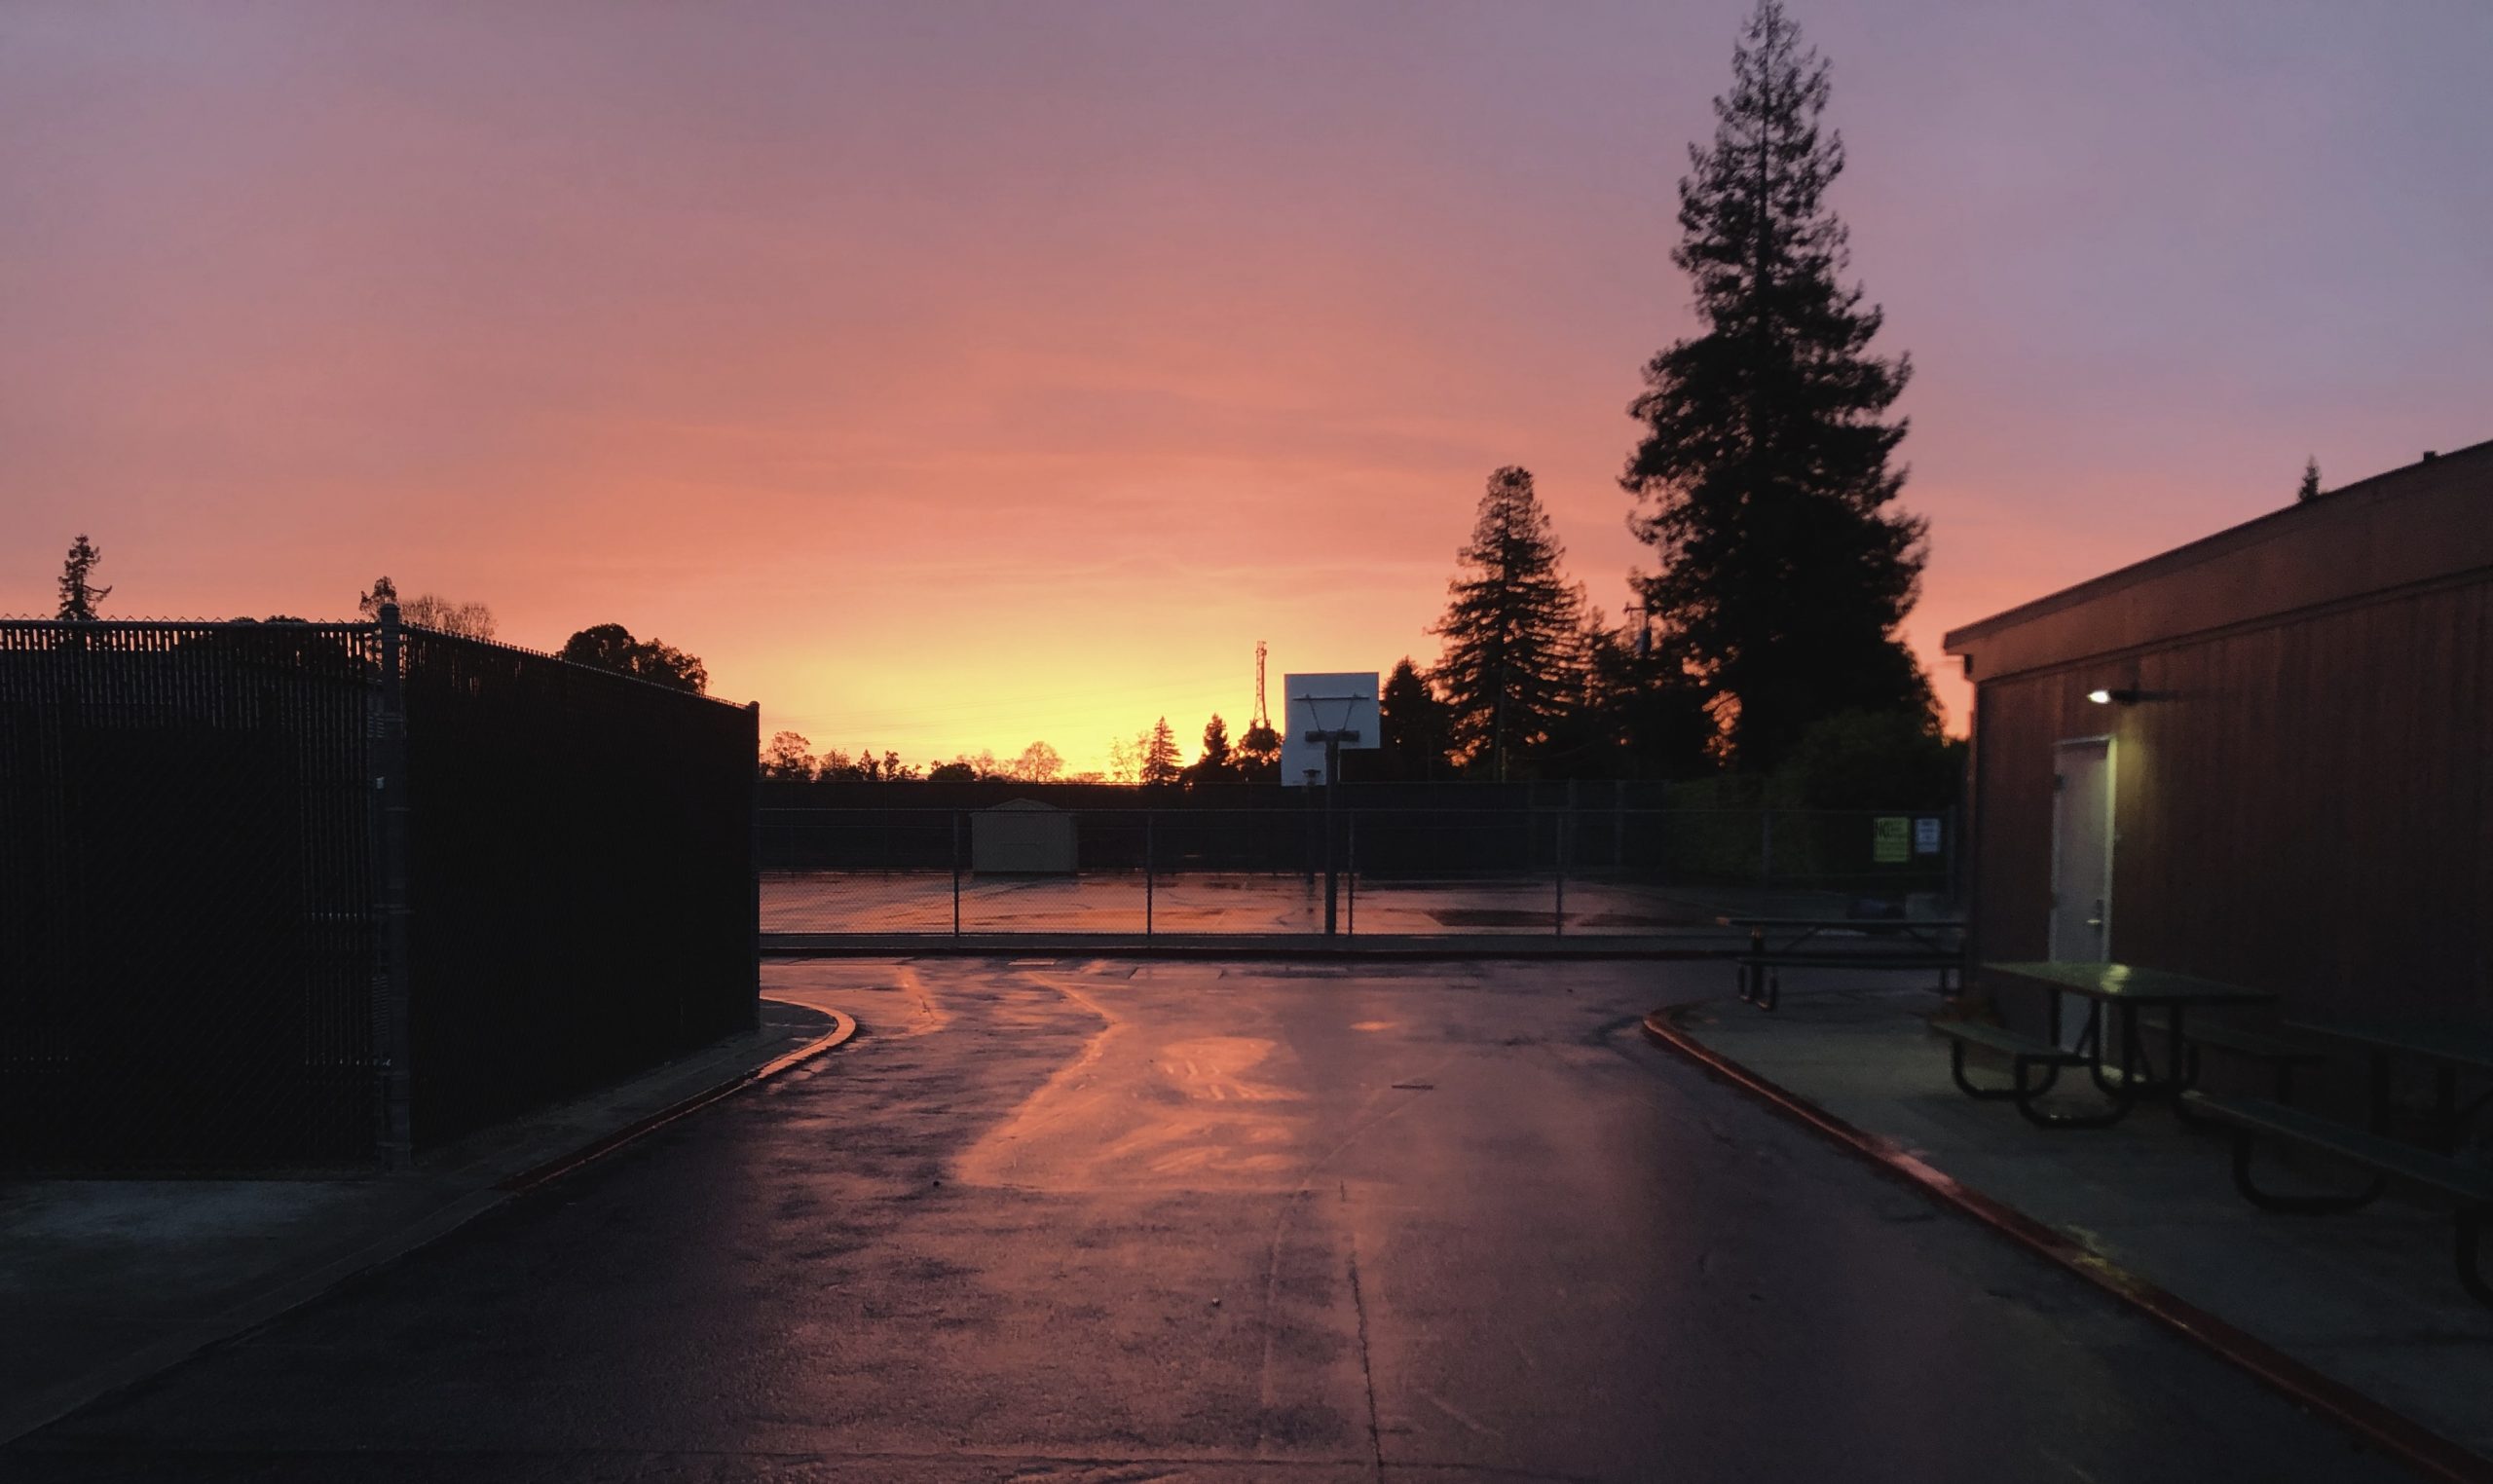 Sunrise at the high school.